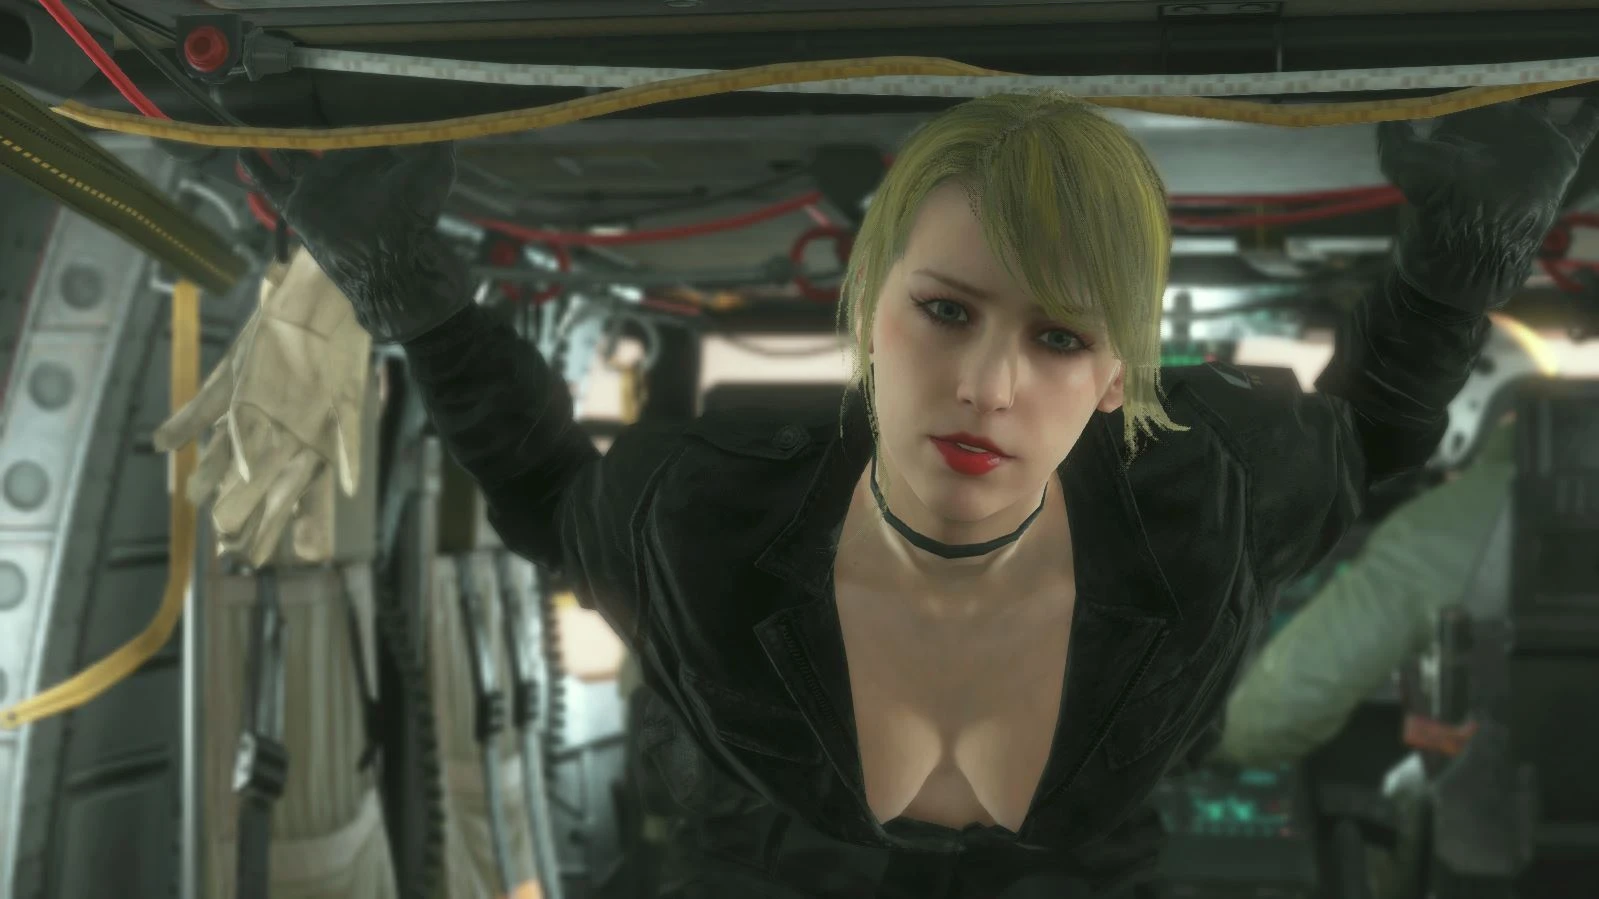 Quiet Blonde Hair Makeup And Black Sniper Wolf Dress at Metal Gear